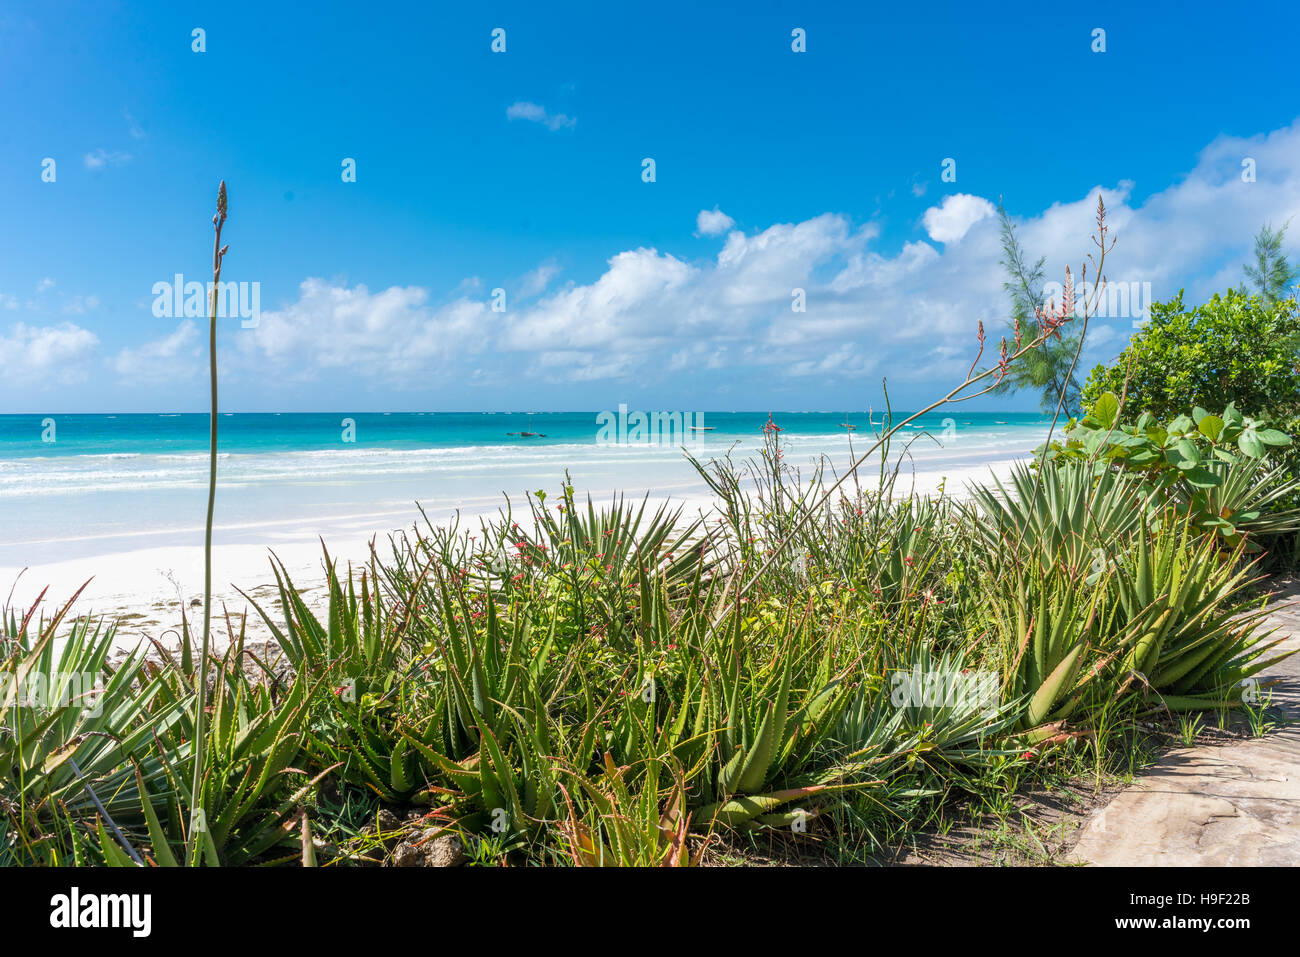 The beautiful Diani Beach along the Shores of the Indian Ocean in Mombasa, Kenya Stock Photo